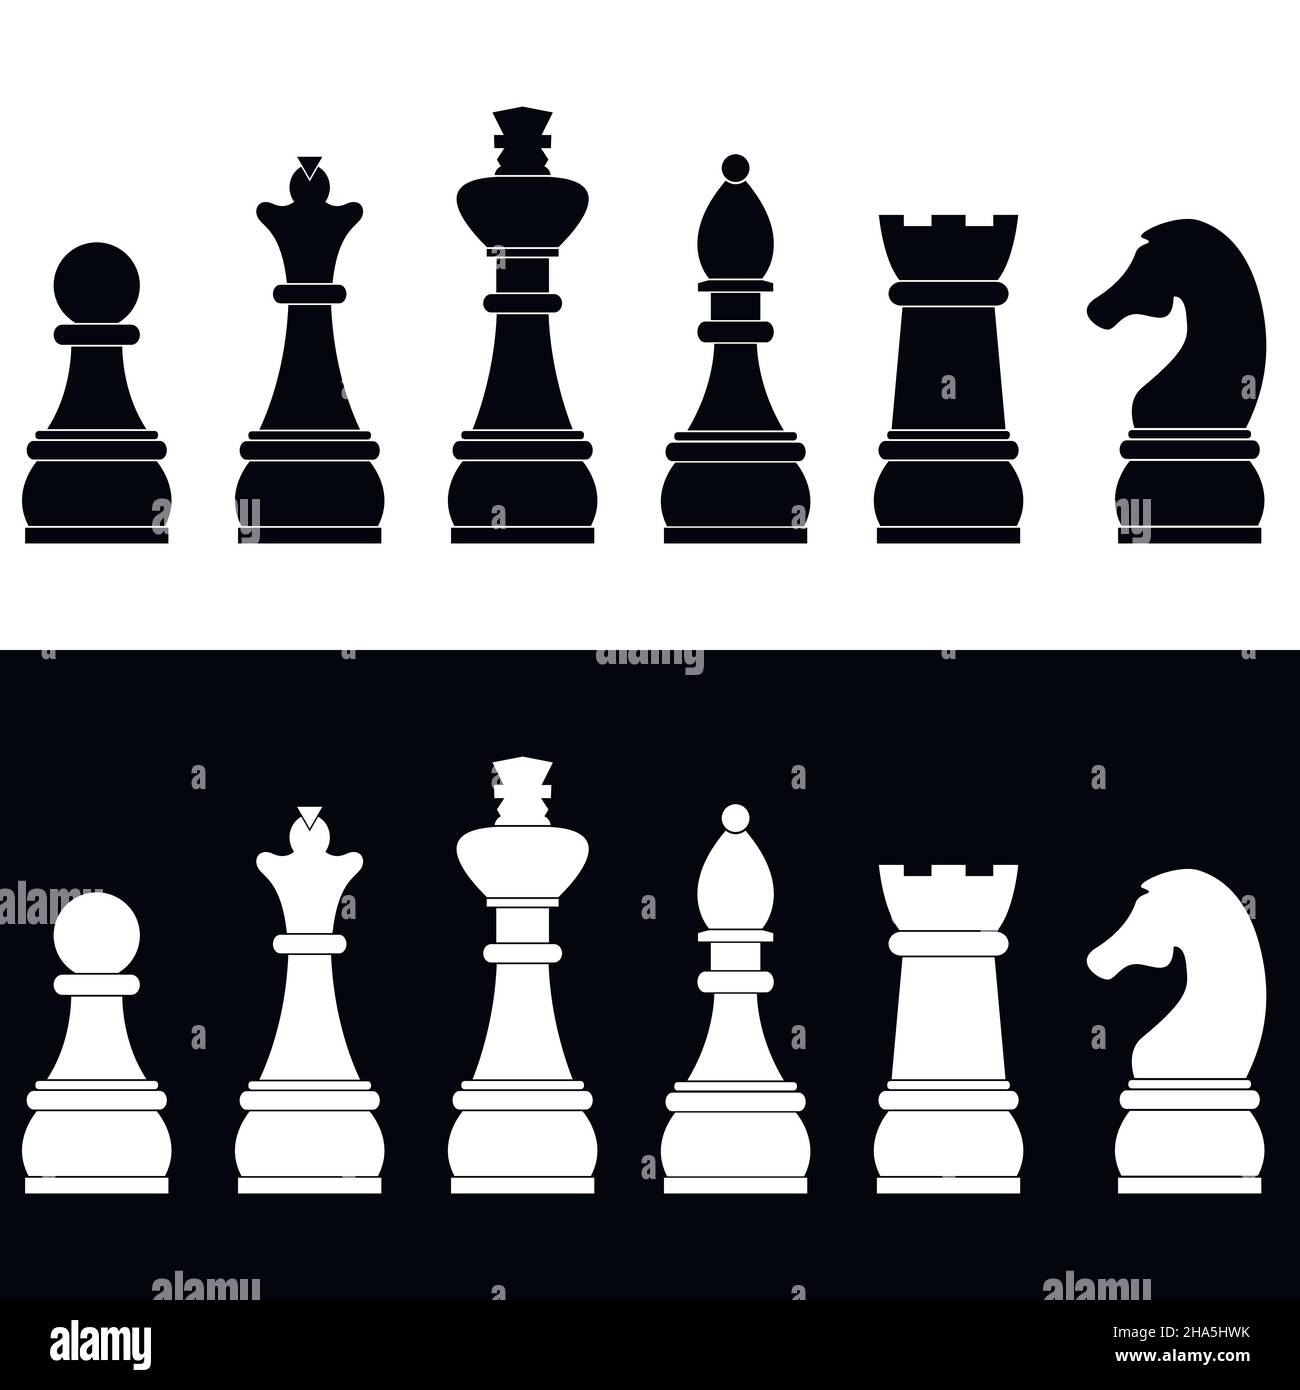 Chess Piece Arrangement Vector Images (over 280)